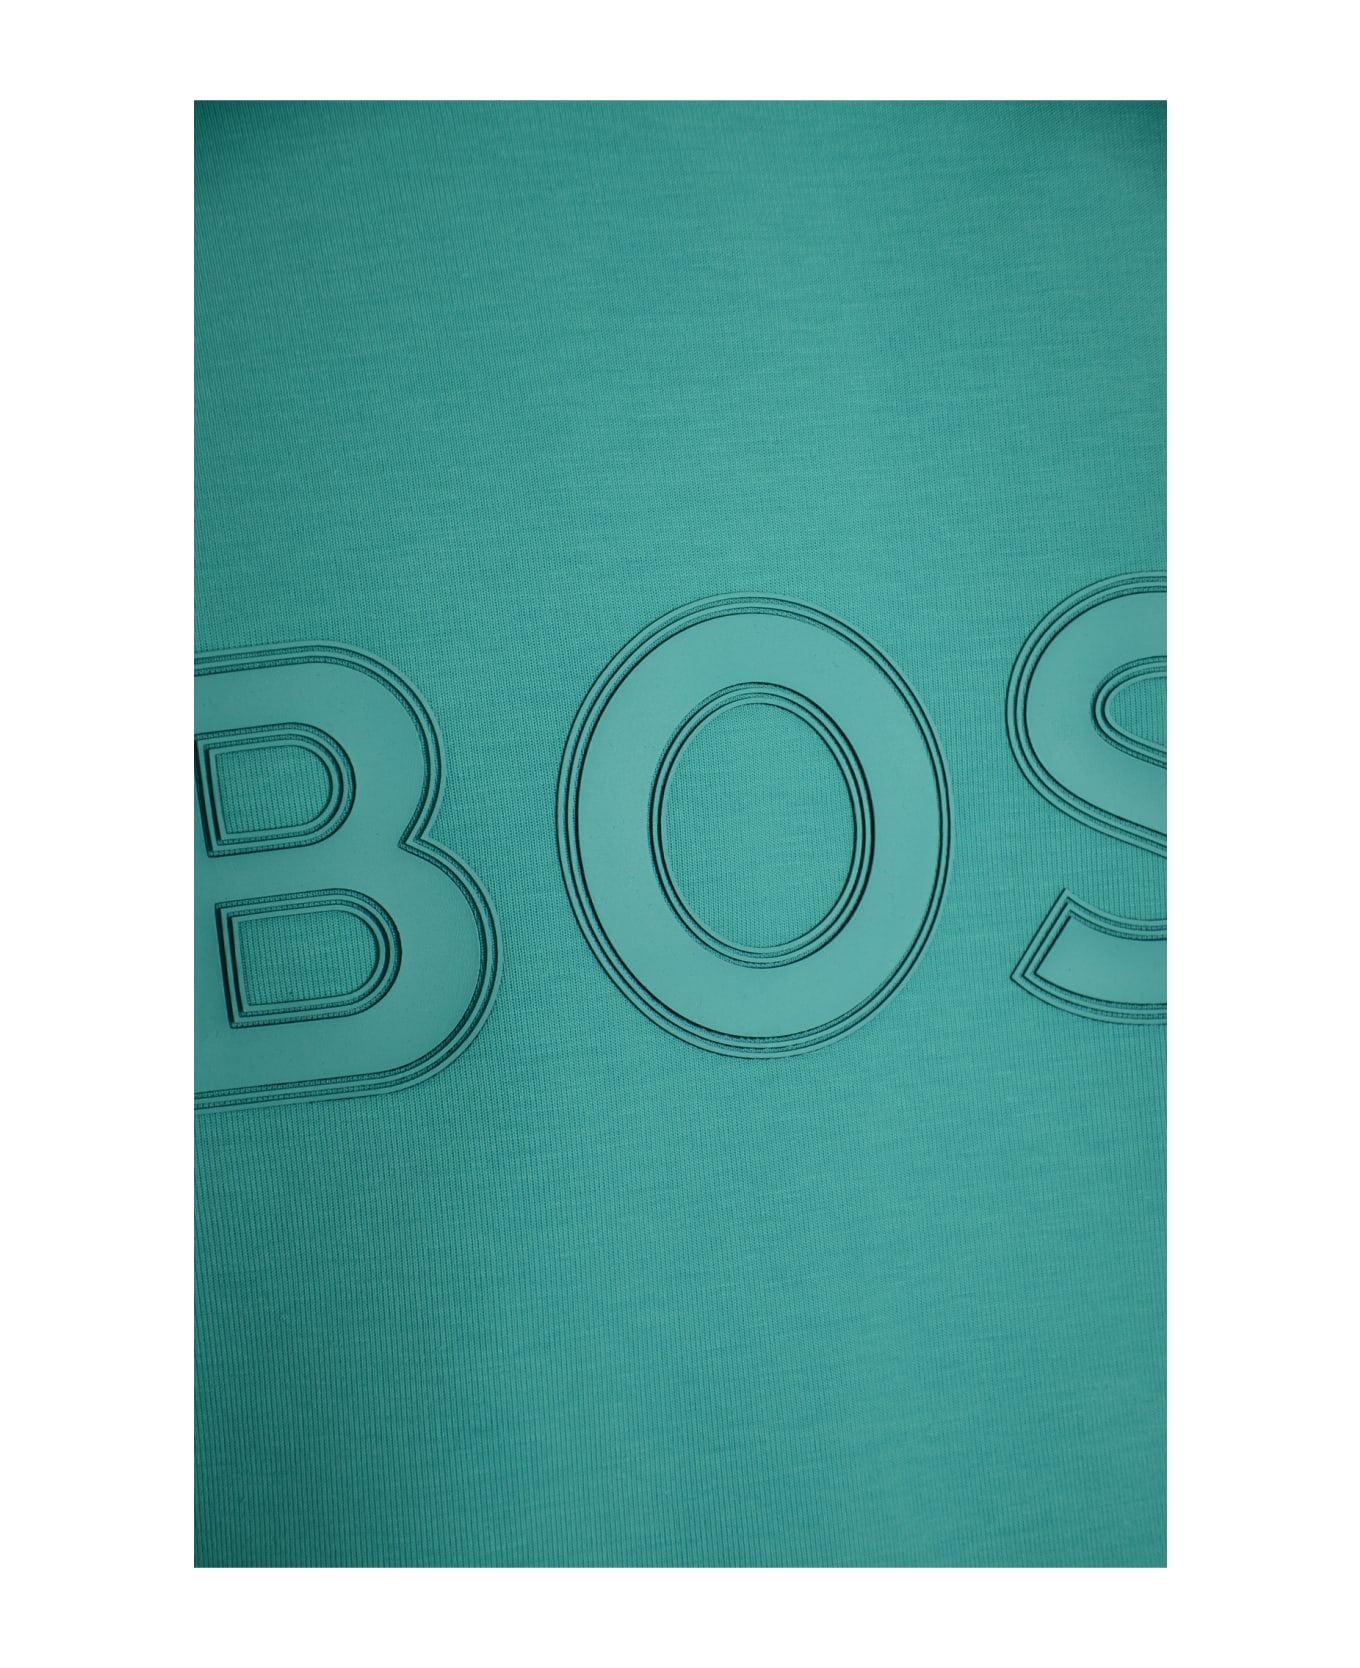 Hugo Boss Logo Embossed Sweatshirt - Open Green